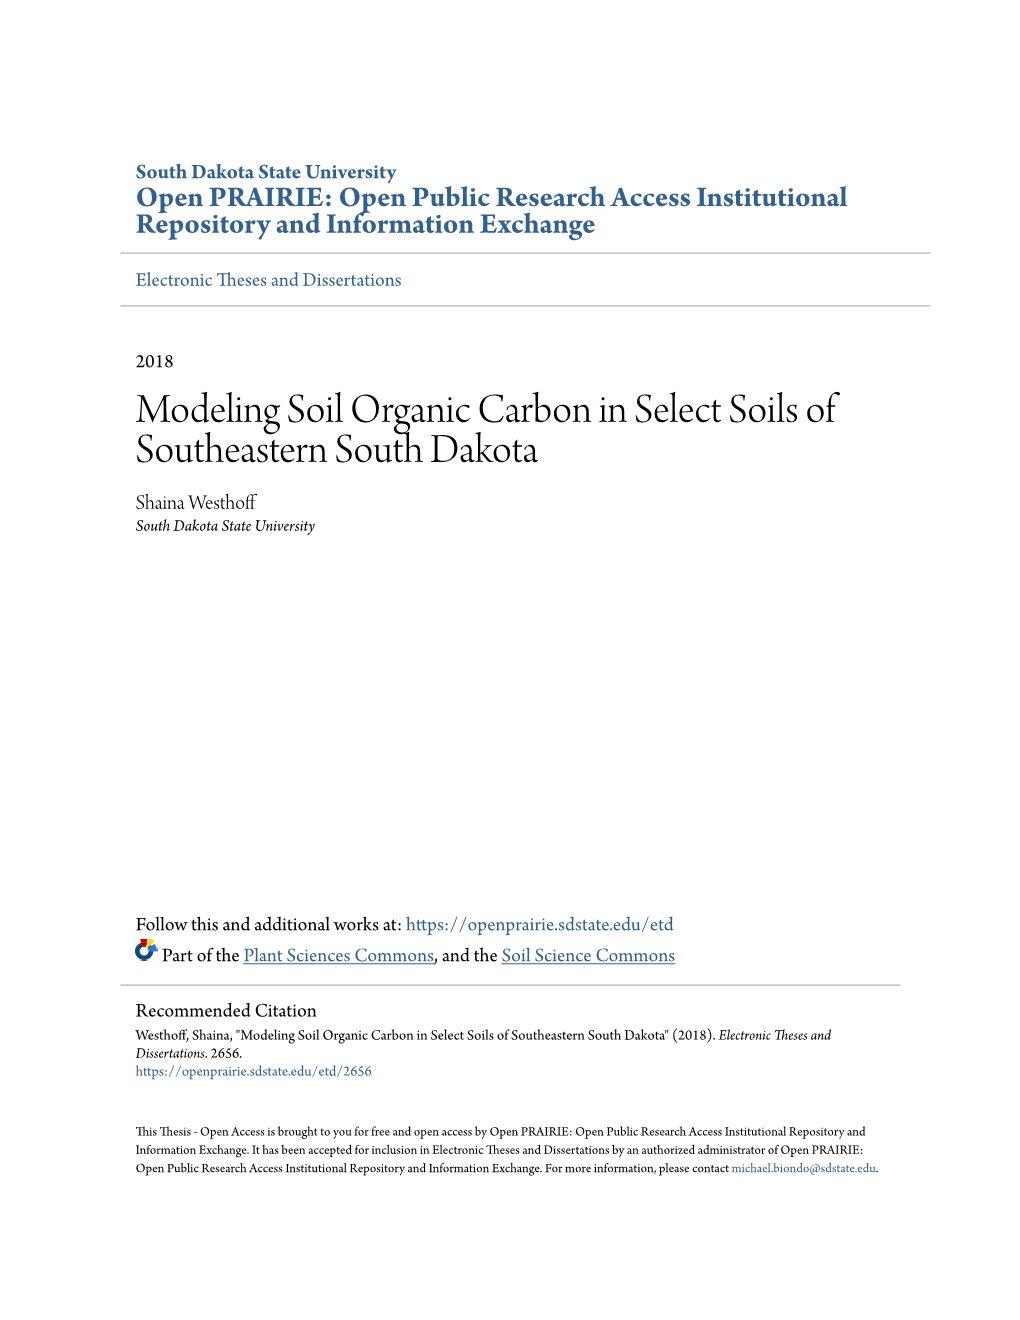 Modeling Soil Organic Carbon in Select Soils of Southeastern South Dakota Shaina Westhoff South Dakota State University